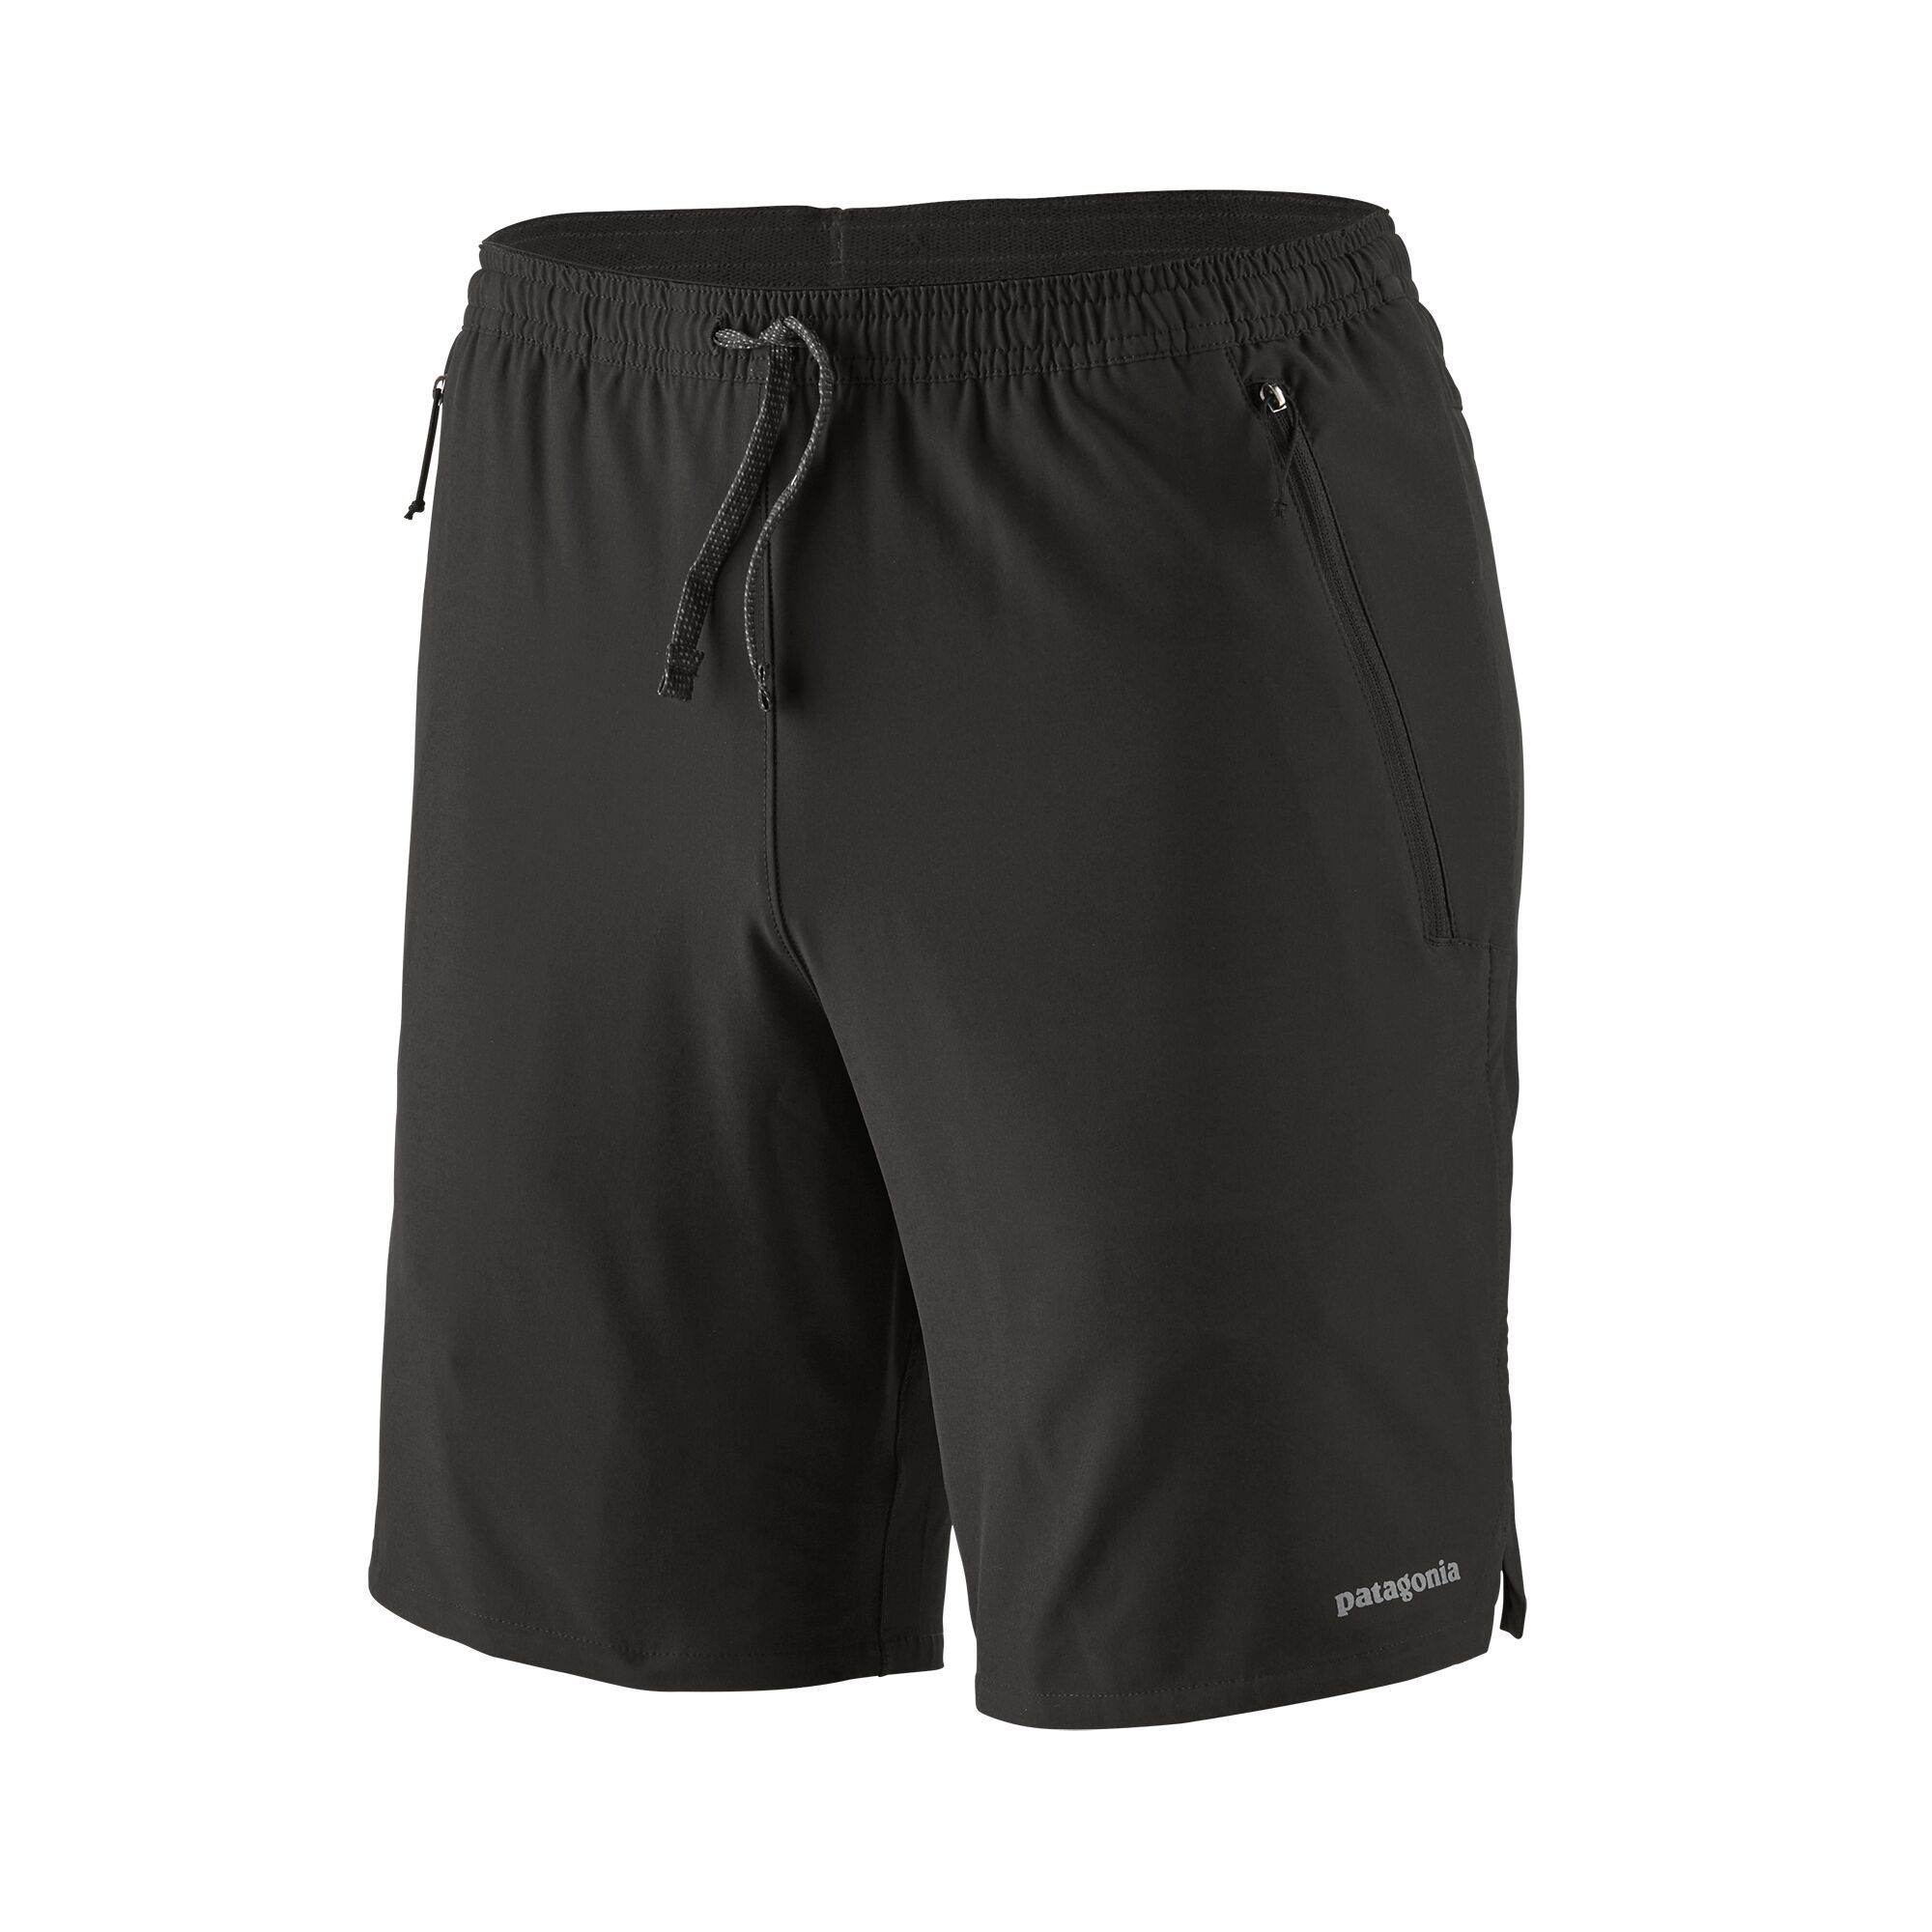 Patagonia Men's Nine Trails Shorts - 20cm Leg - Recycled Polyester, Black / S